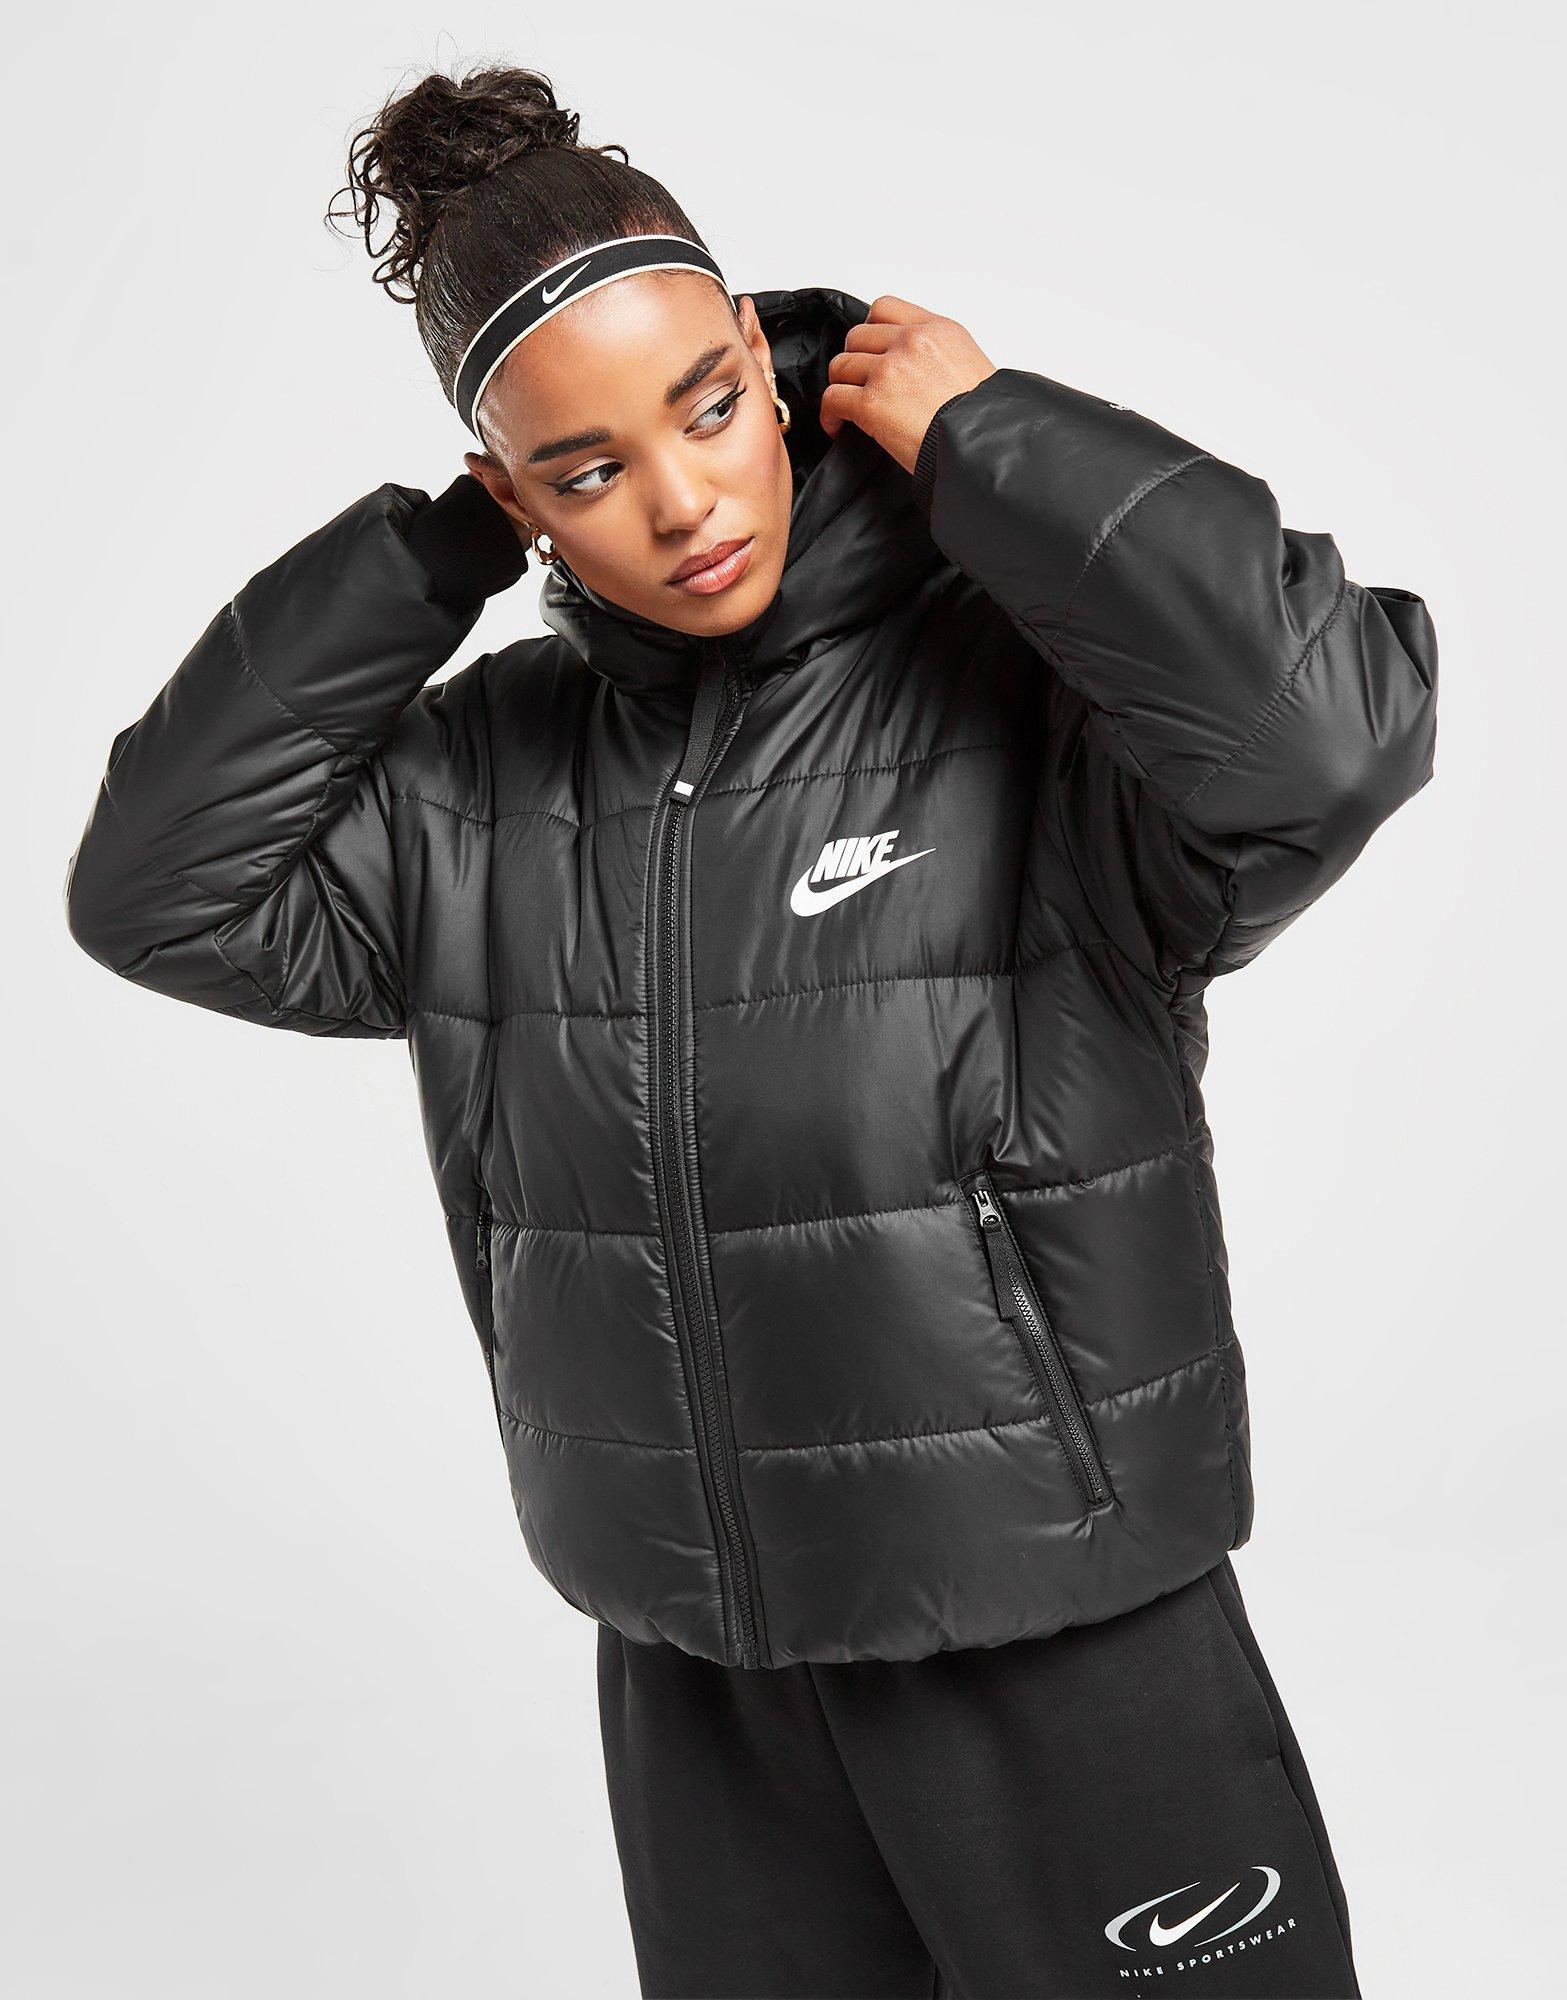 Sotavento Sobrio código Nike chaqueta Padded en Negro | JD Sports España